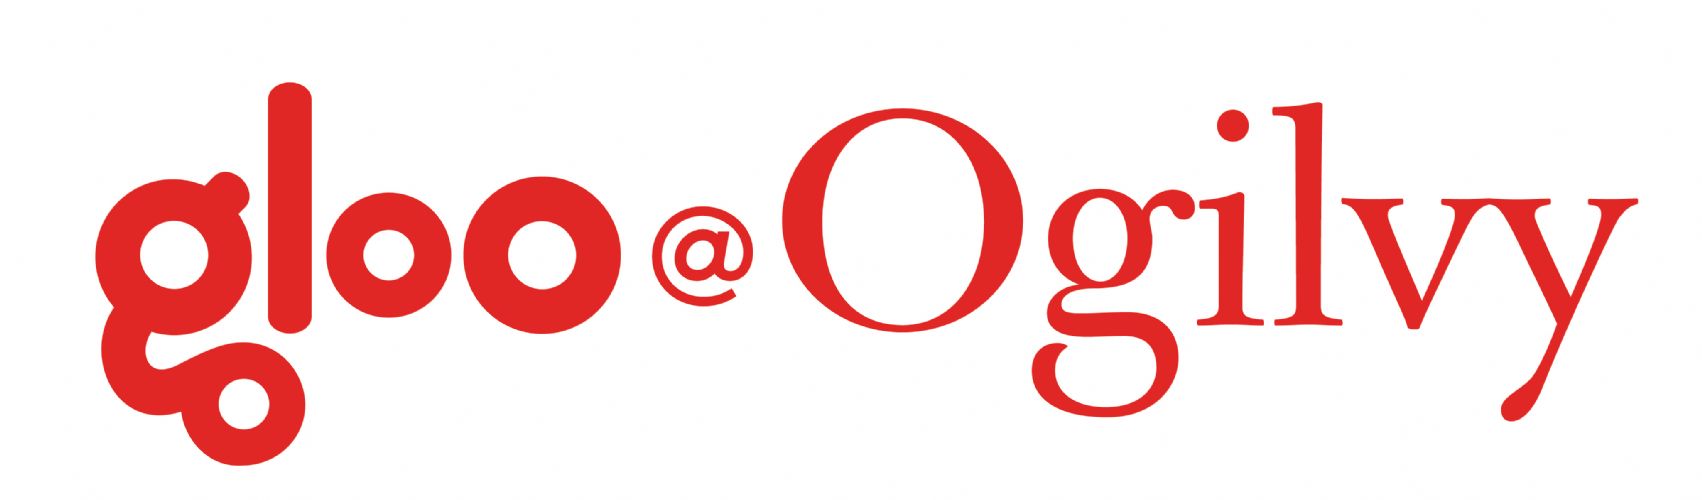 gloo@Ogilvy_logo_red-01_copy_copy_86558.jpg